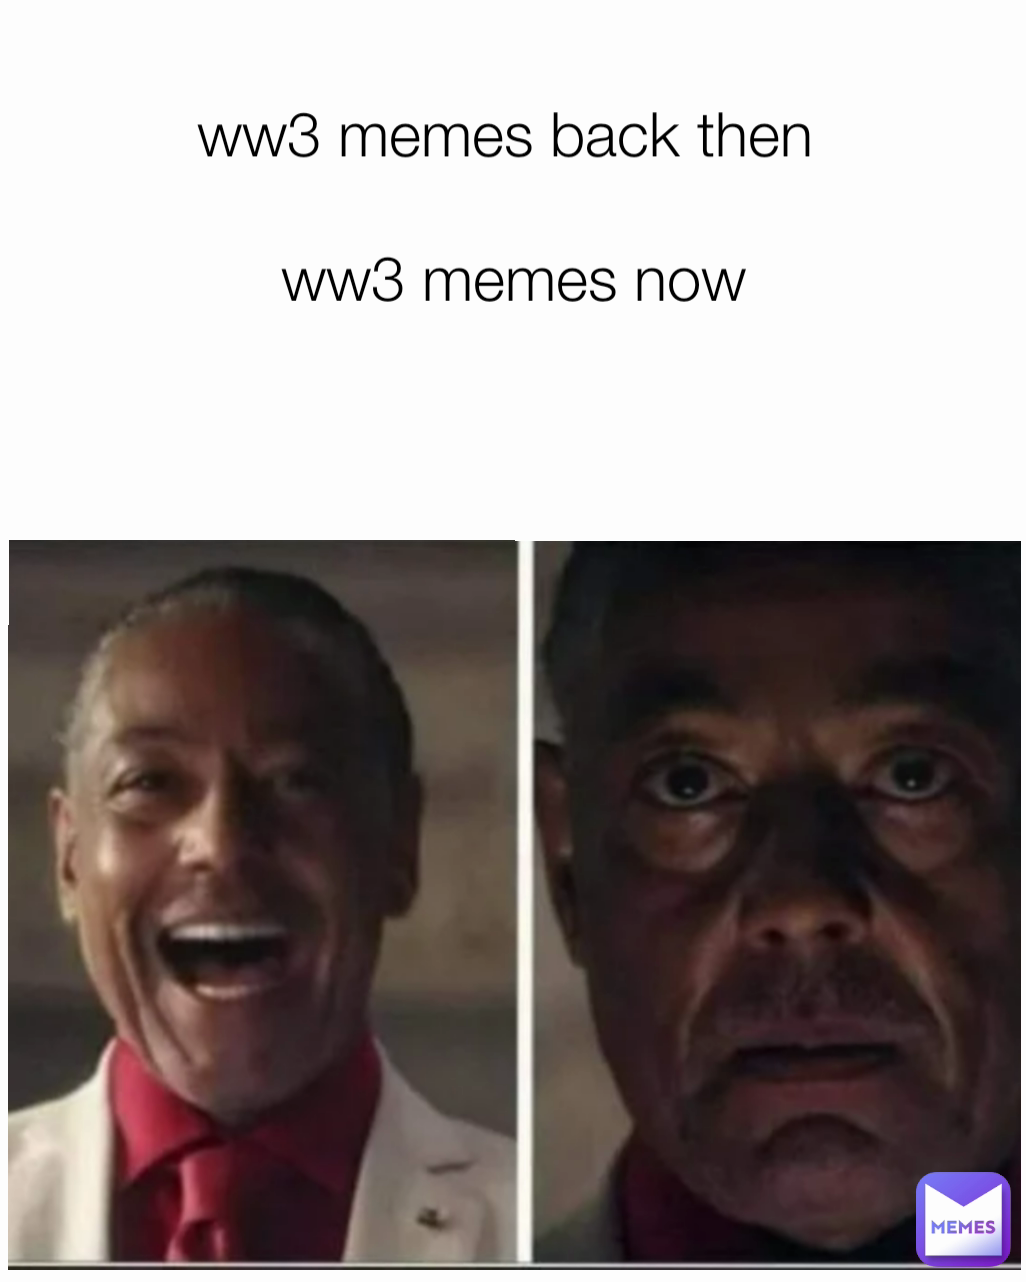 ww3 memes back then 

ww3 memes now